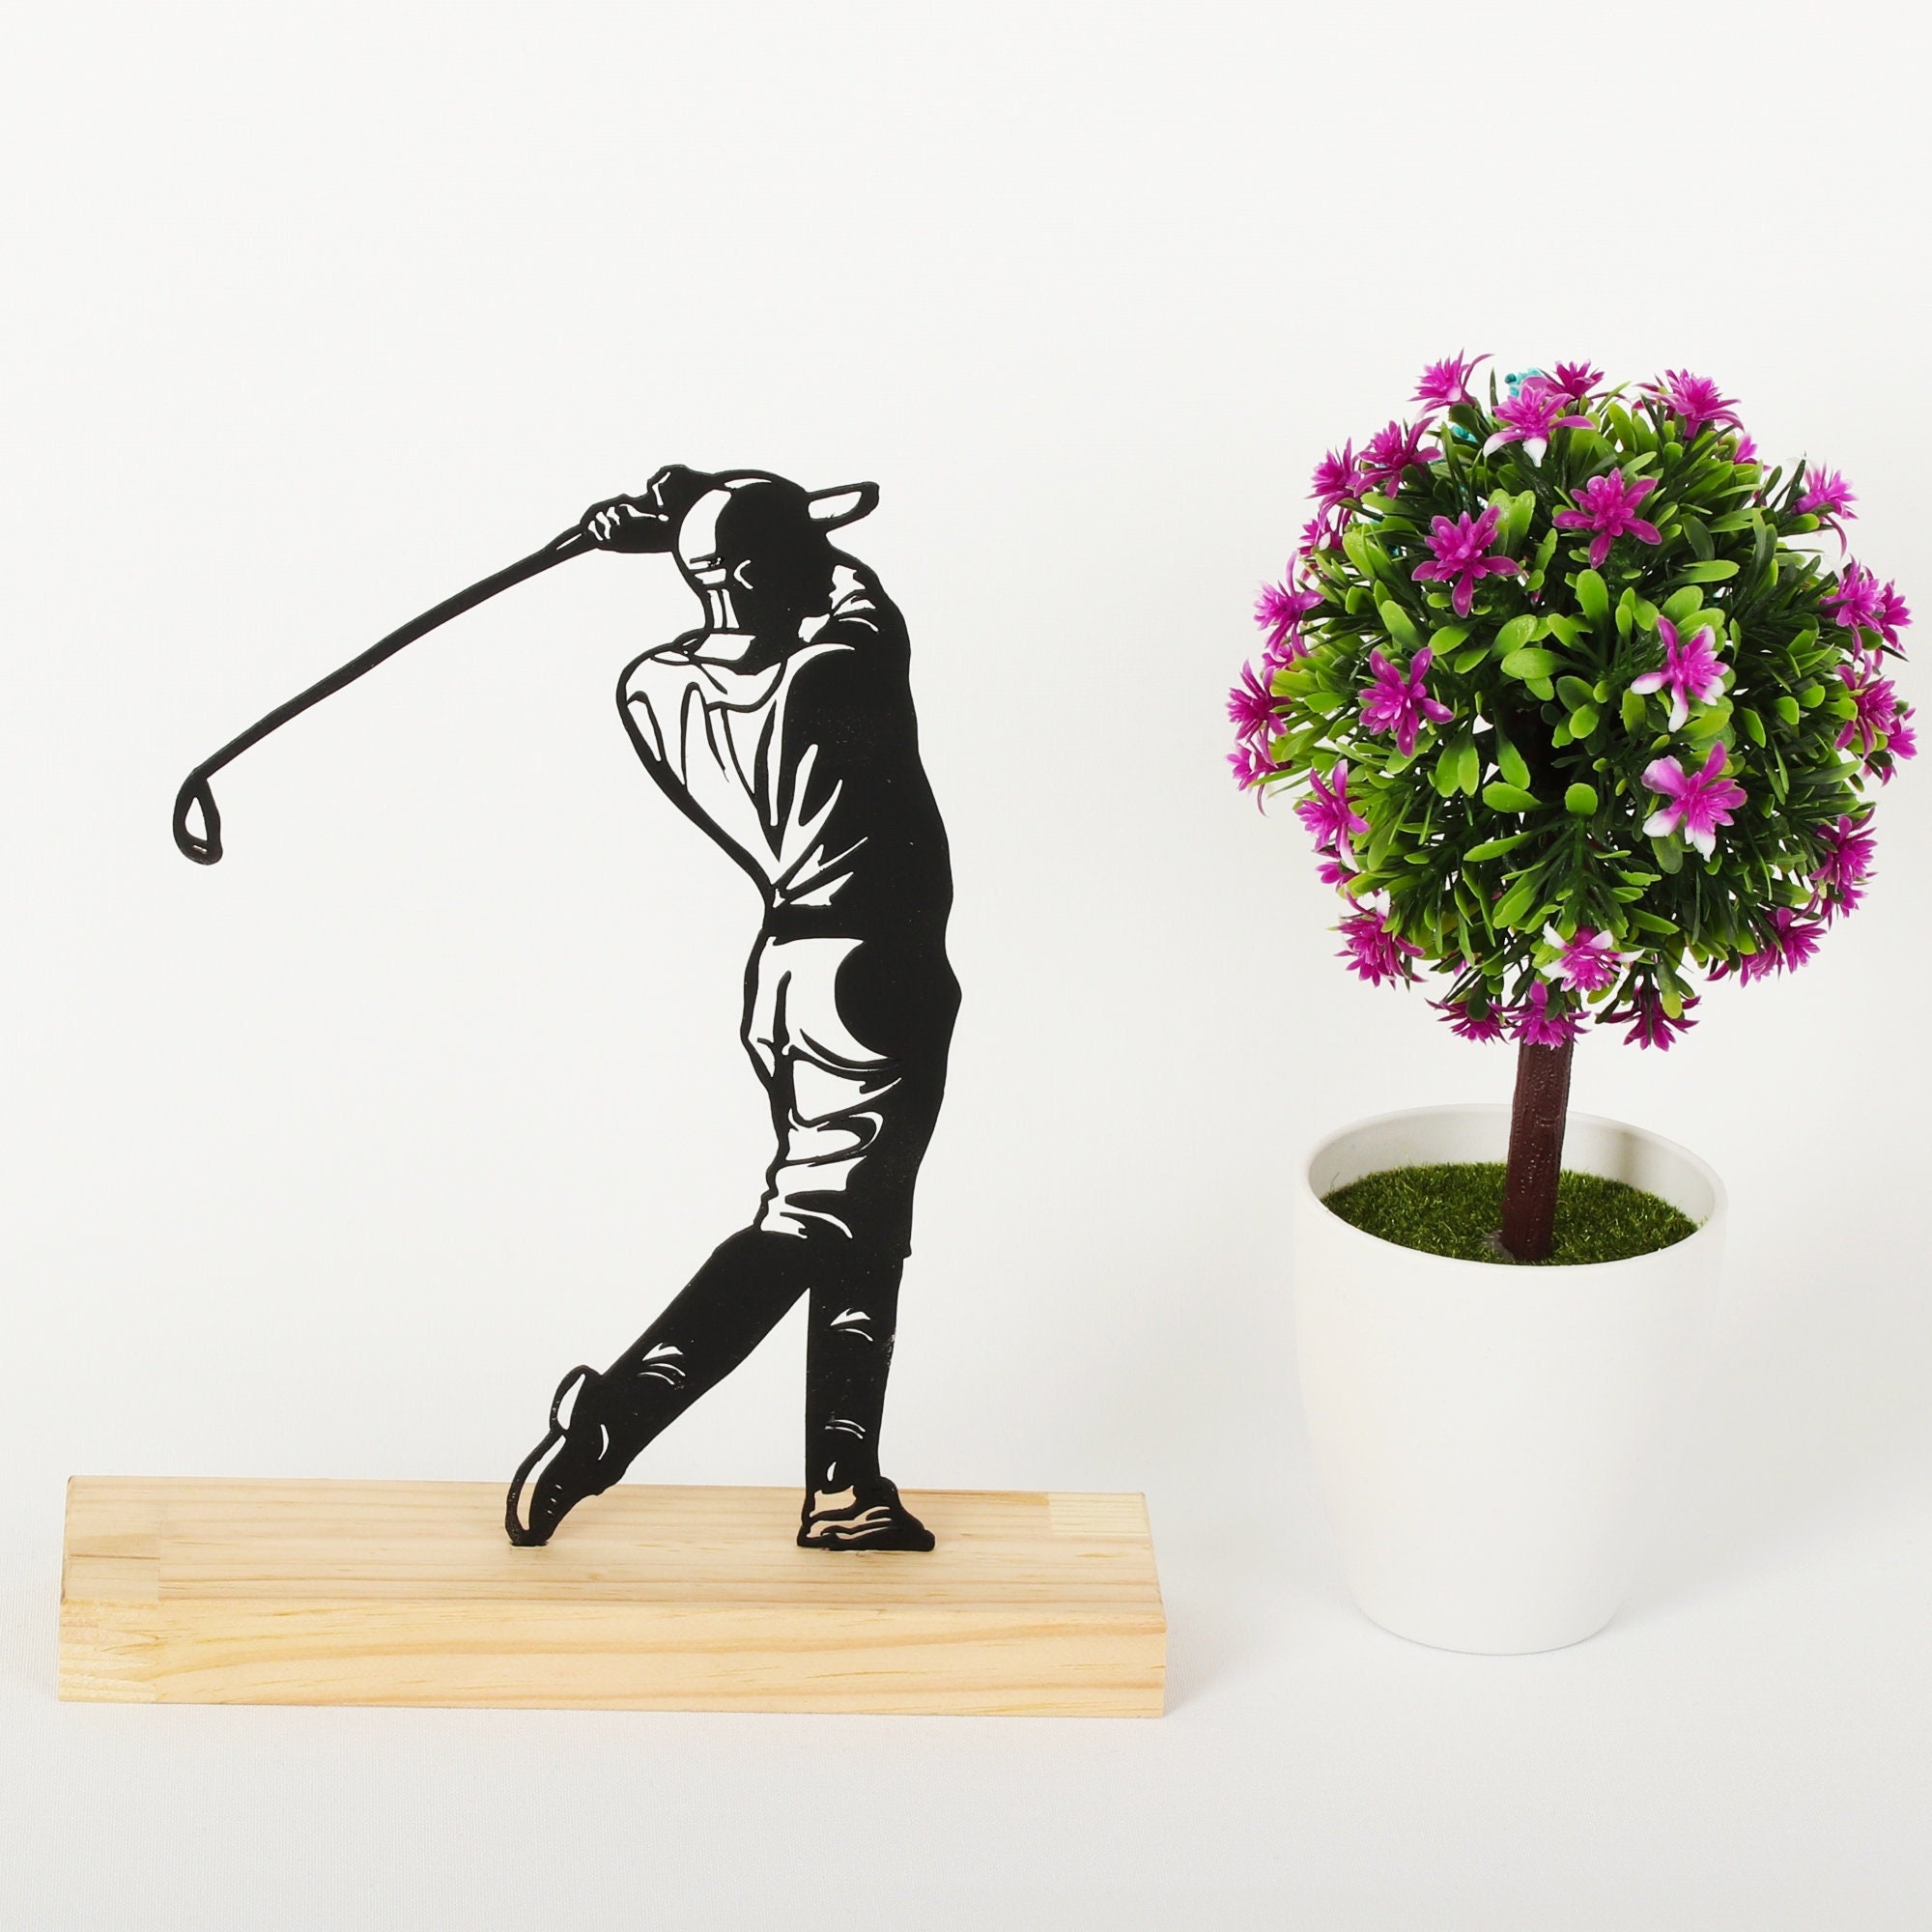 Golf Pen Gift Set Cool Office Gadgets Desk Accessories for Men